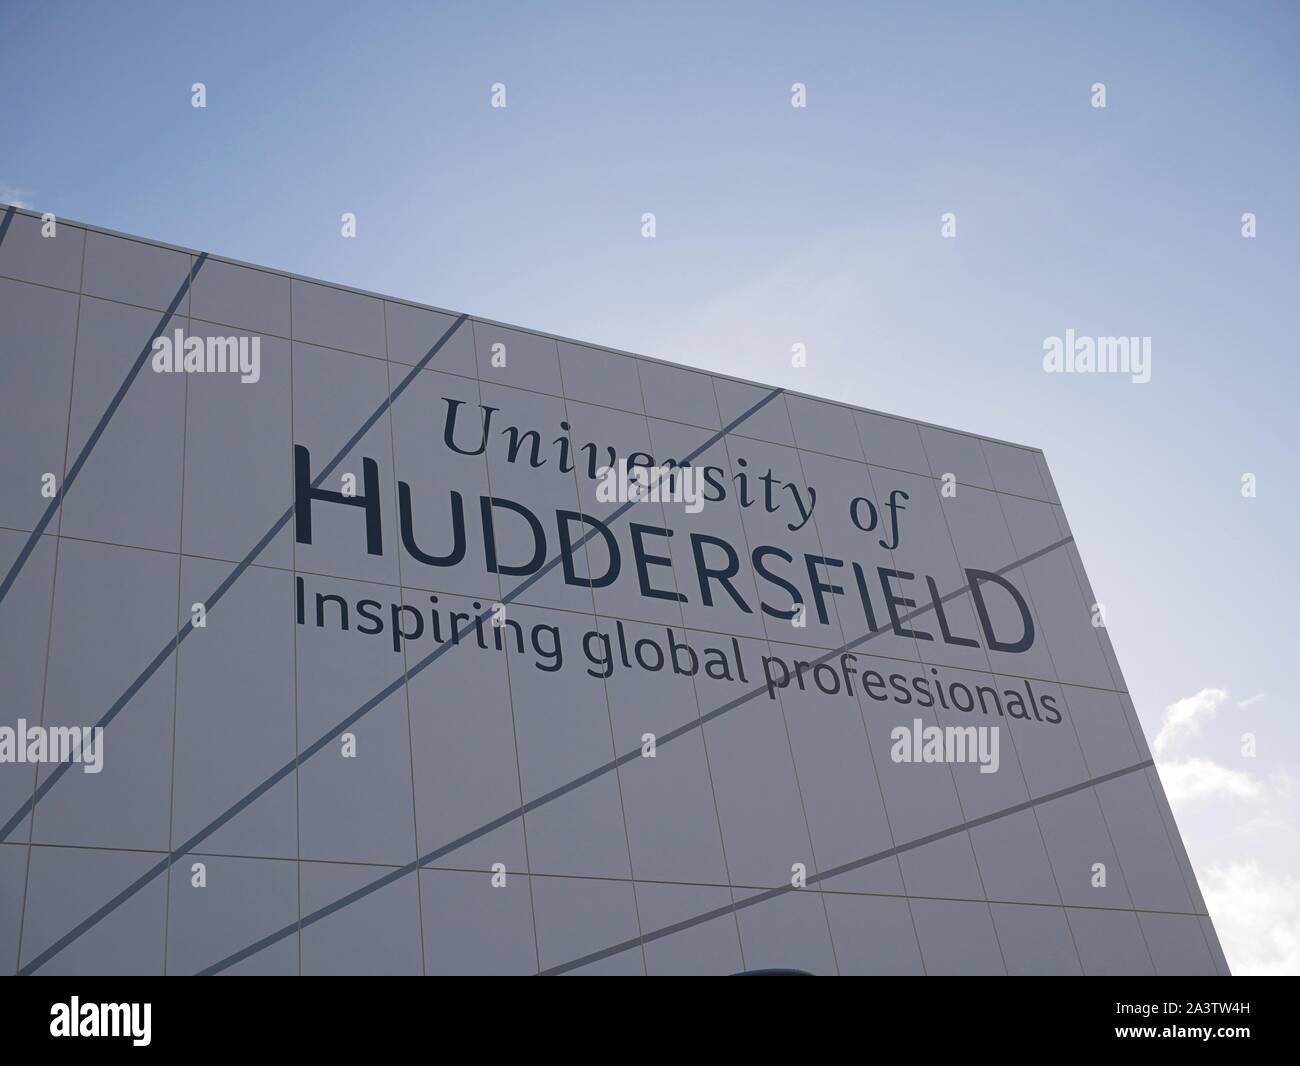 University of Huddersfield inspiring global professionals written on the Barbara Hepworth building at the university of Huddersfield Yorkshire England Stock Photo